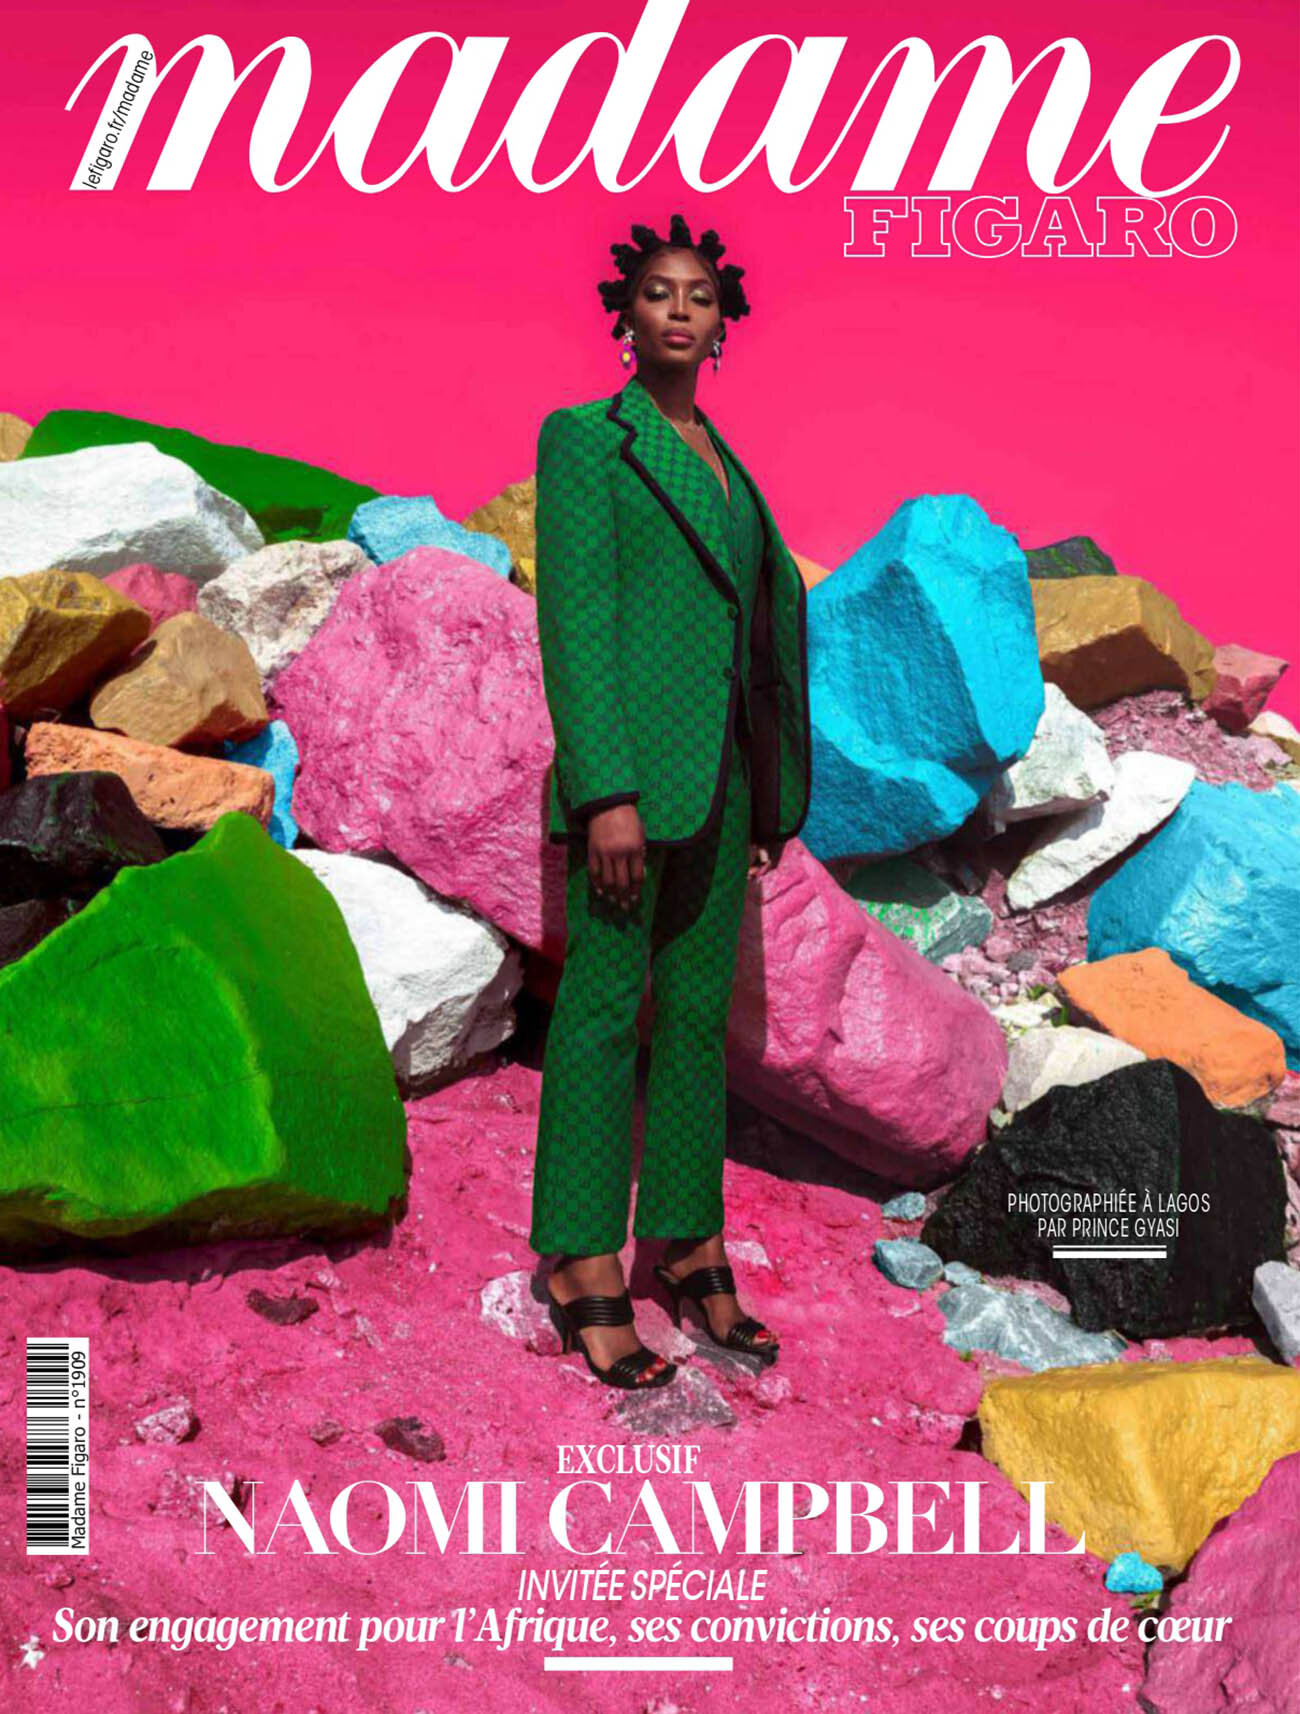 Naomi Campbell Madame Figaro Mar 26 by Prince Gyasi (2).jpg